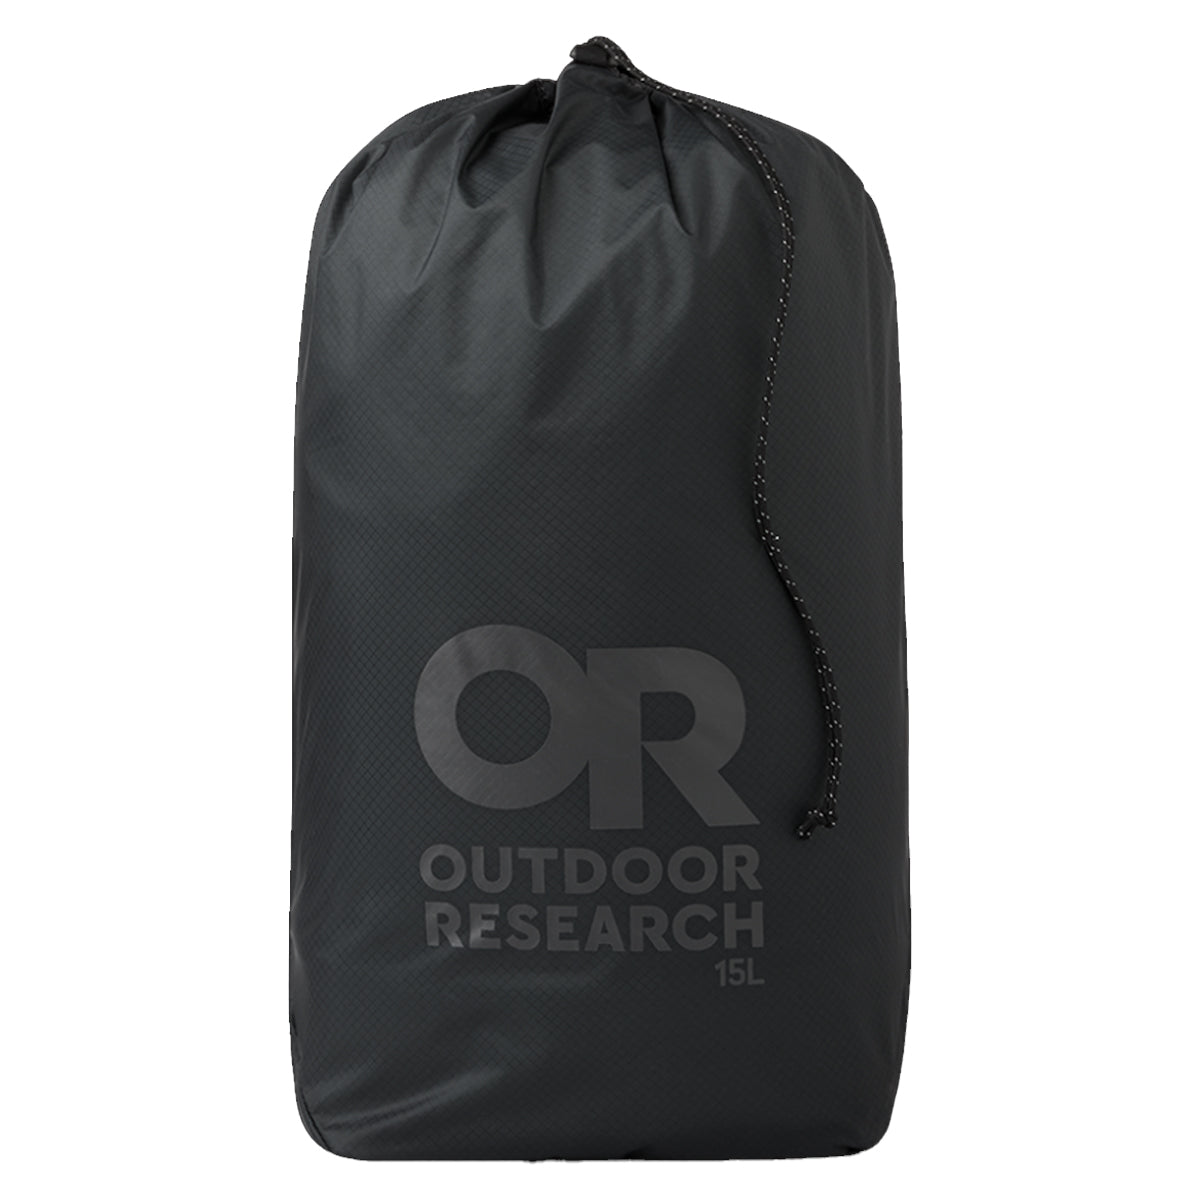 Outdoor Research PackOut Ultralight Stuff Sack in  by GOHUNT | Outdoor Research - GOHUNT Shop